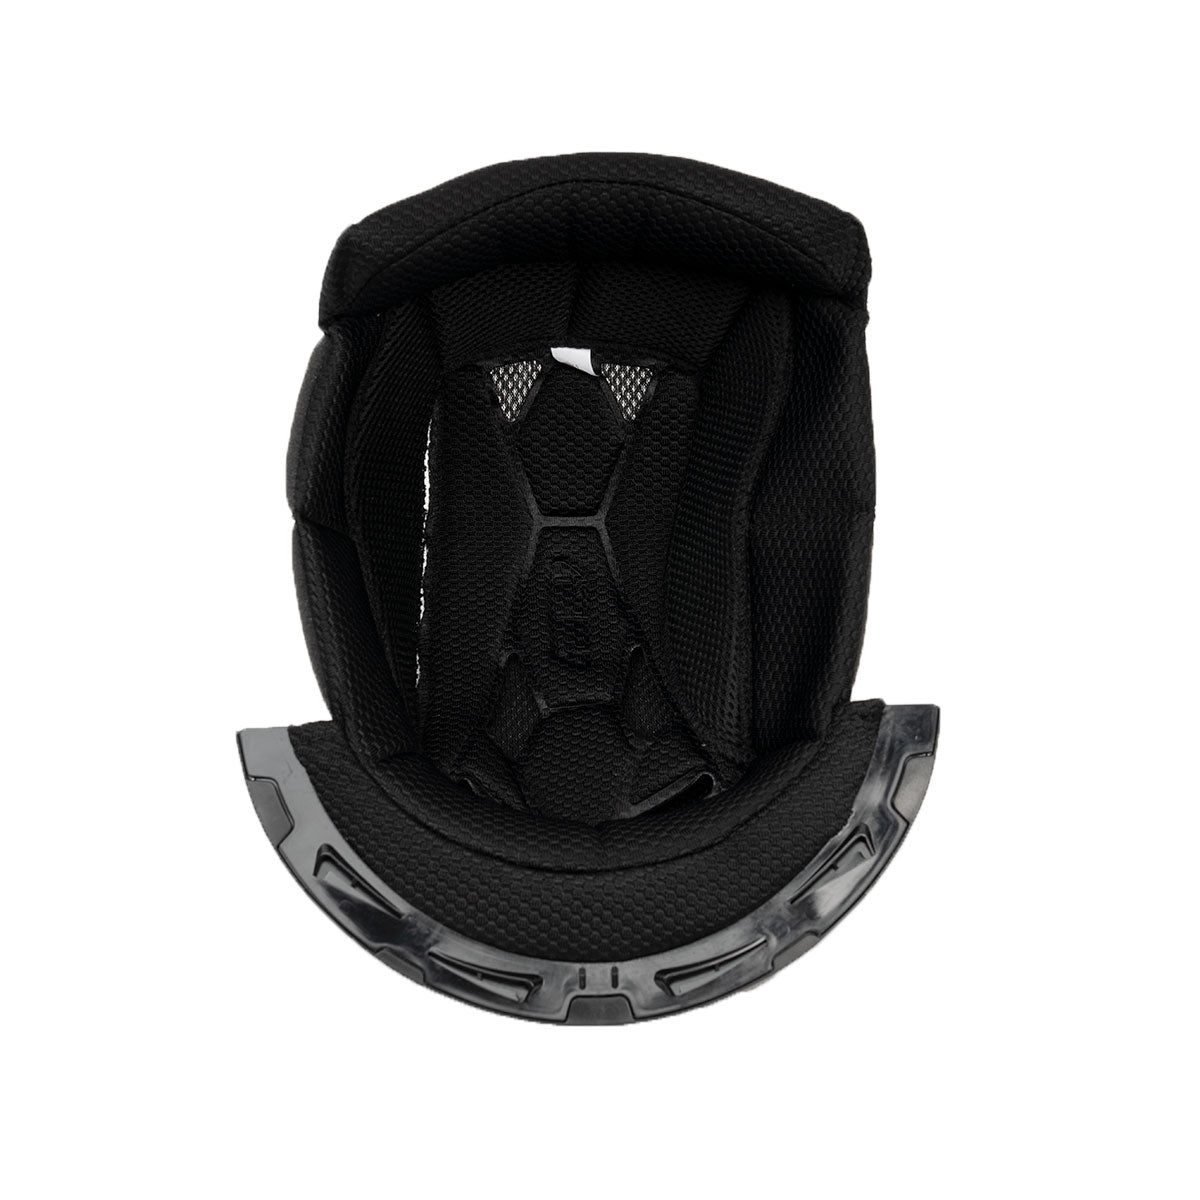 Liner for Delta V and Mach V Helmets